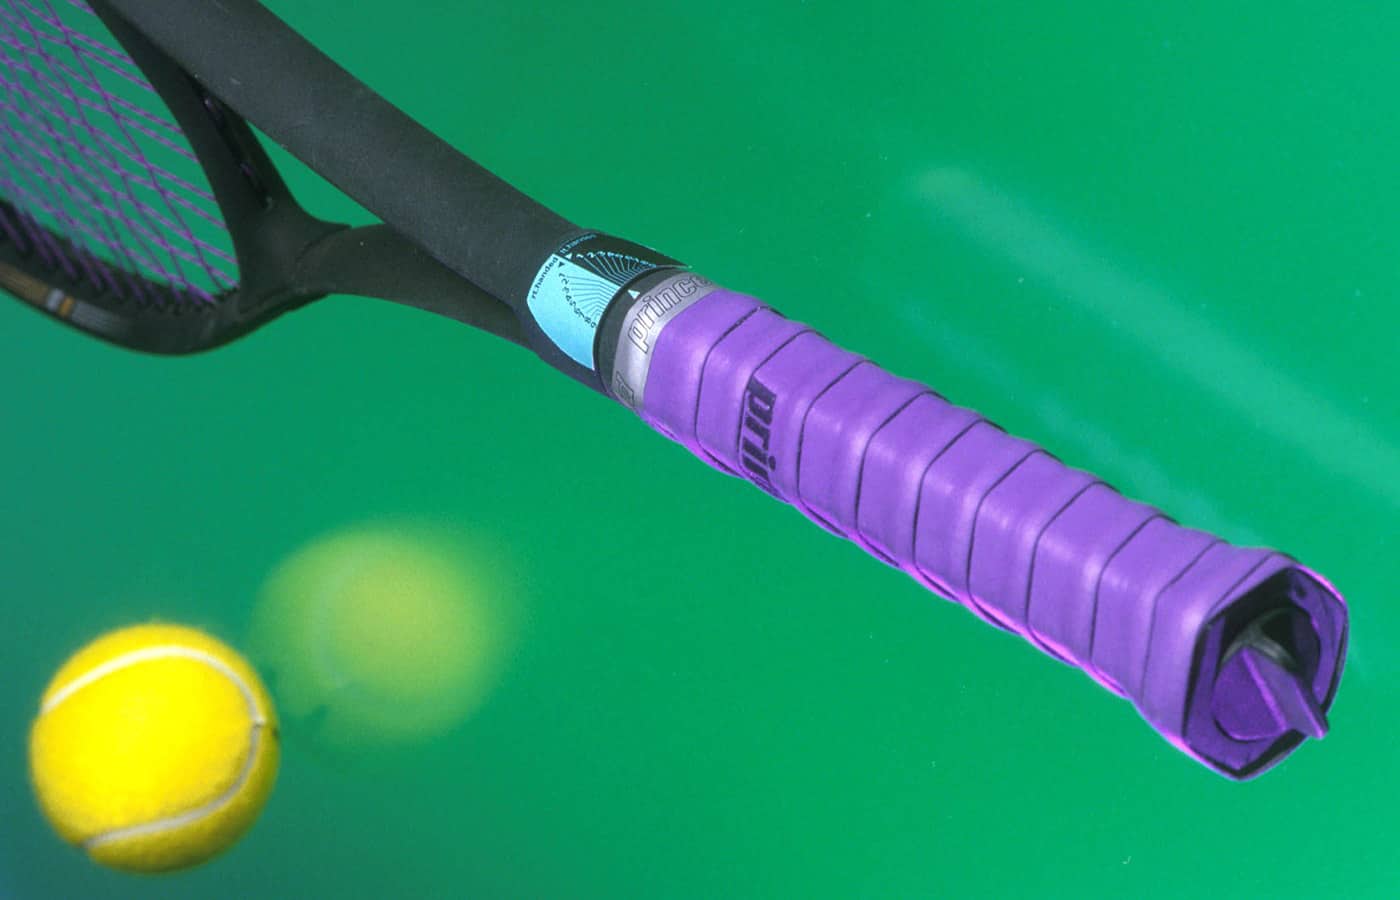 Adjustable Tennis Grip